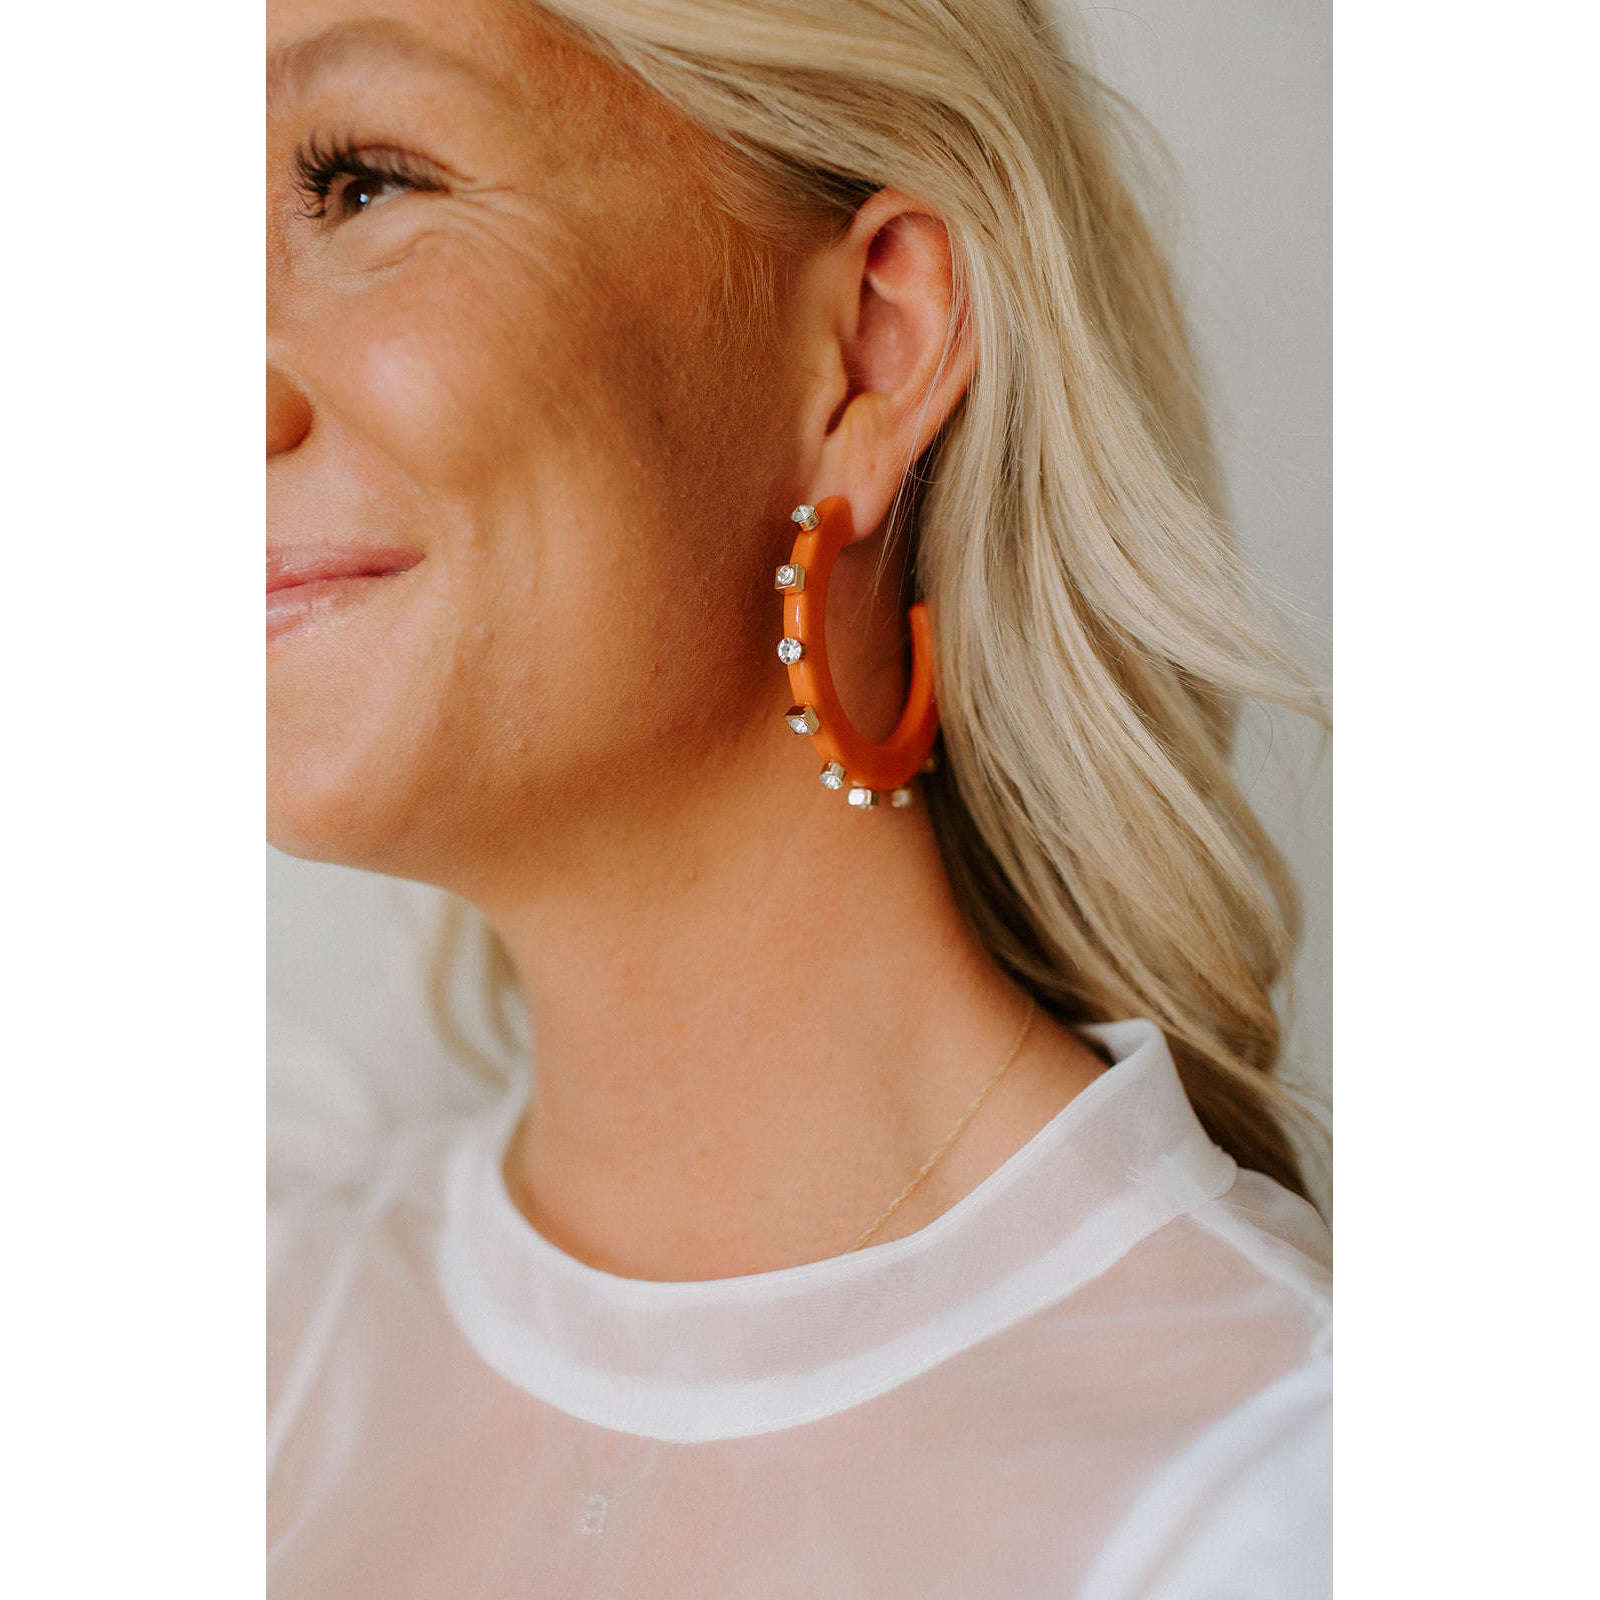 8.28 Boutique:Smith & Co. Jewel Design,Smith & Co. Jewel Design Large City Girl Hoop Earrings,Earrings